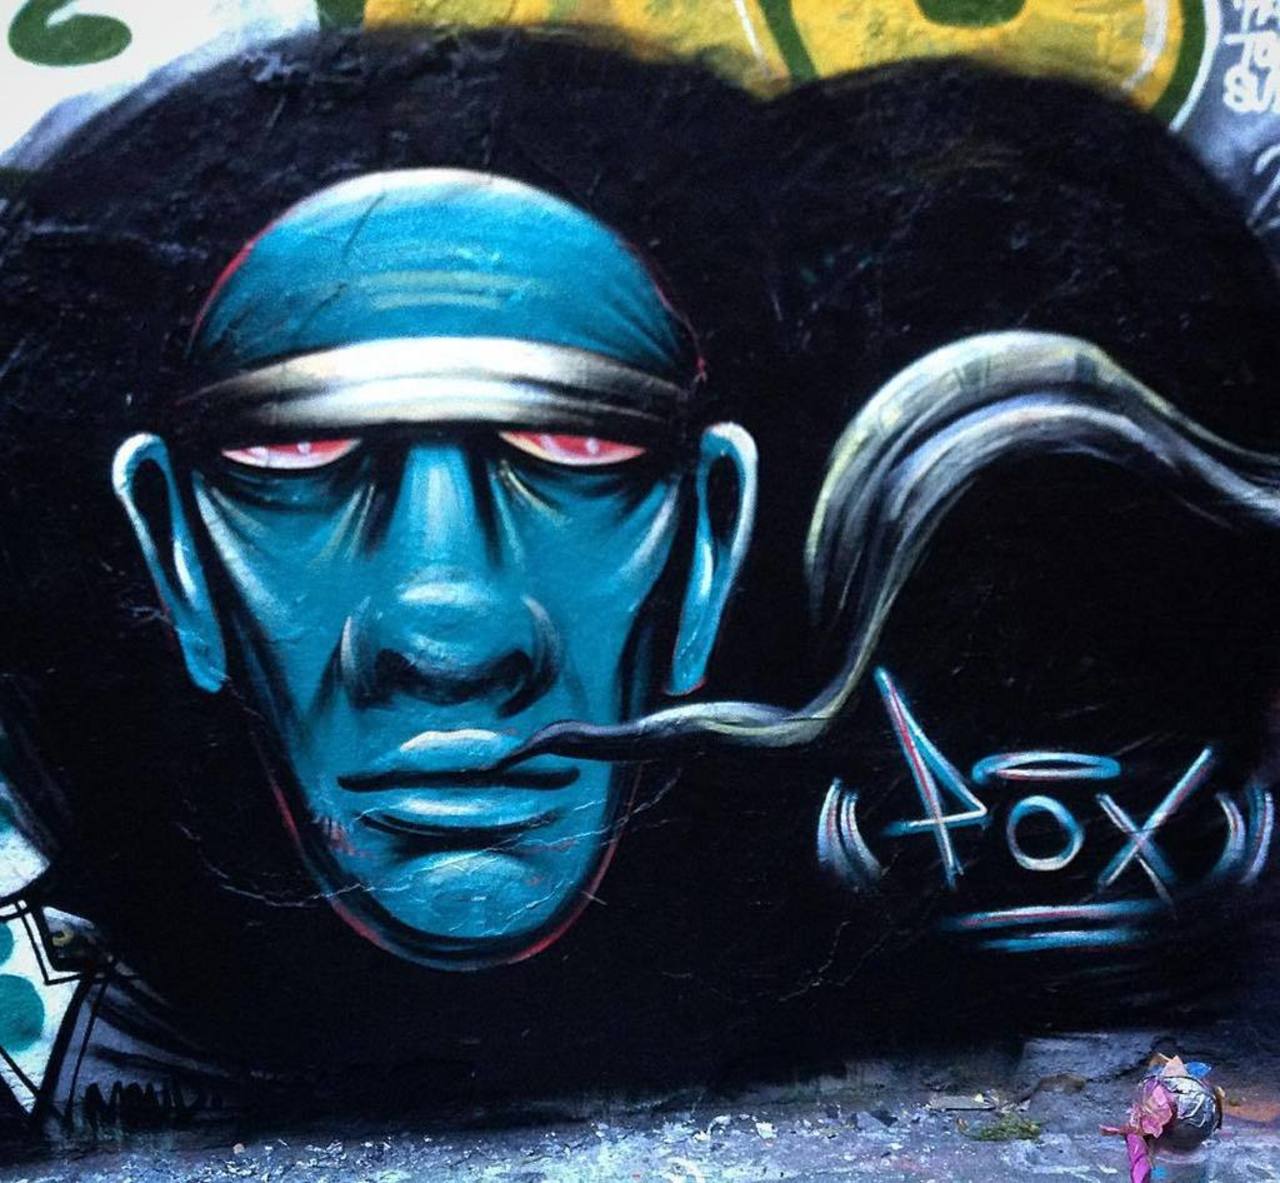 Comme un écran de fumée #pox #ruedenoyez #street #streetart #streetartparis #graff #graffiti #wallart #sprayart #ur… https://t.co/i5ueBpyEIZ